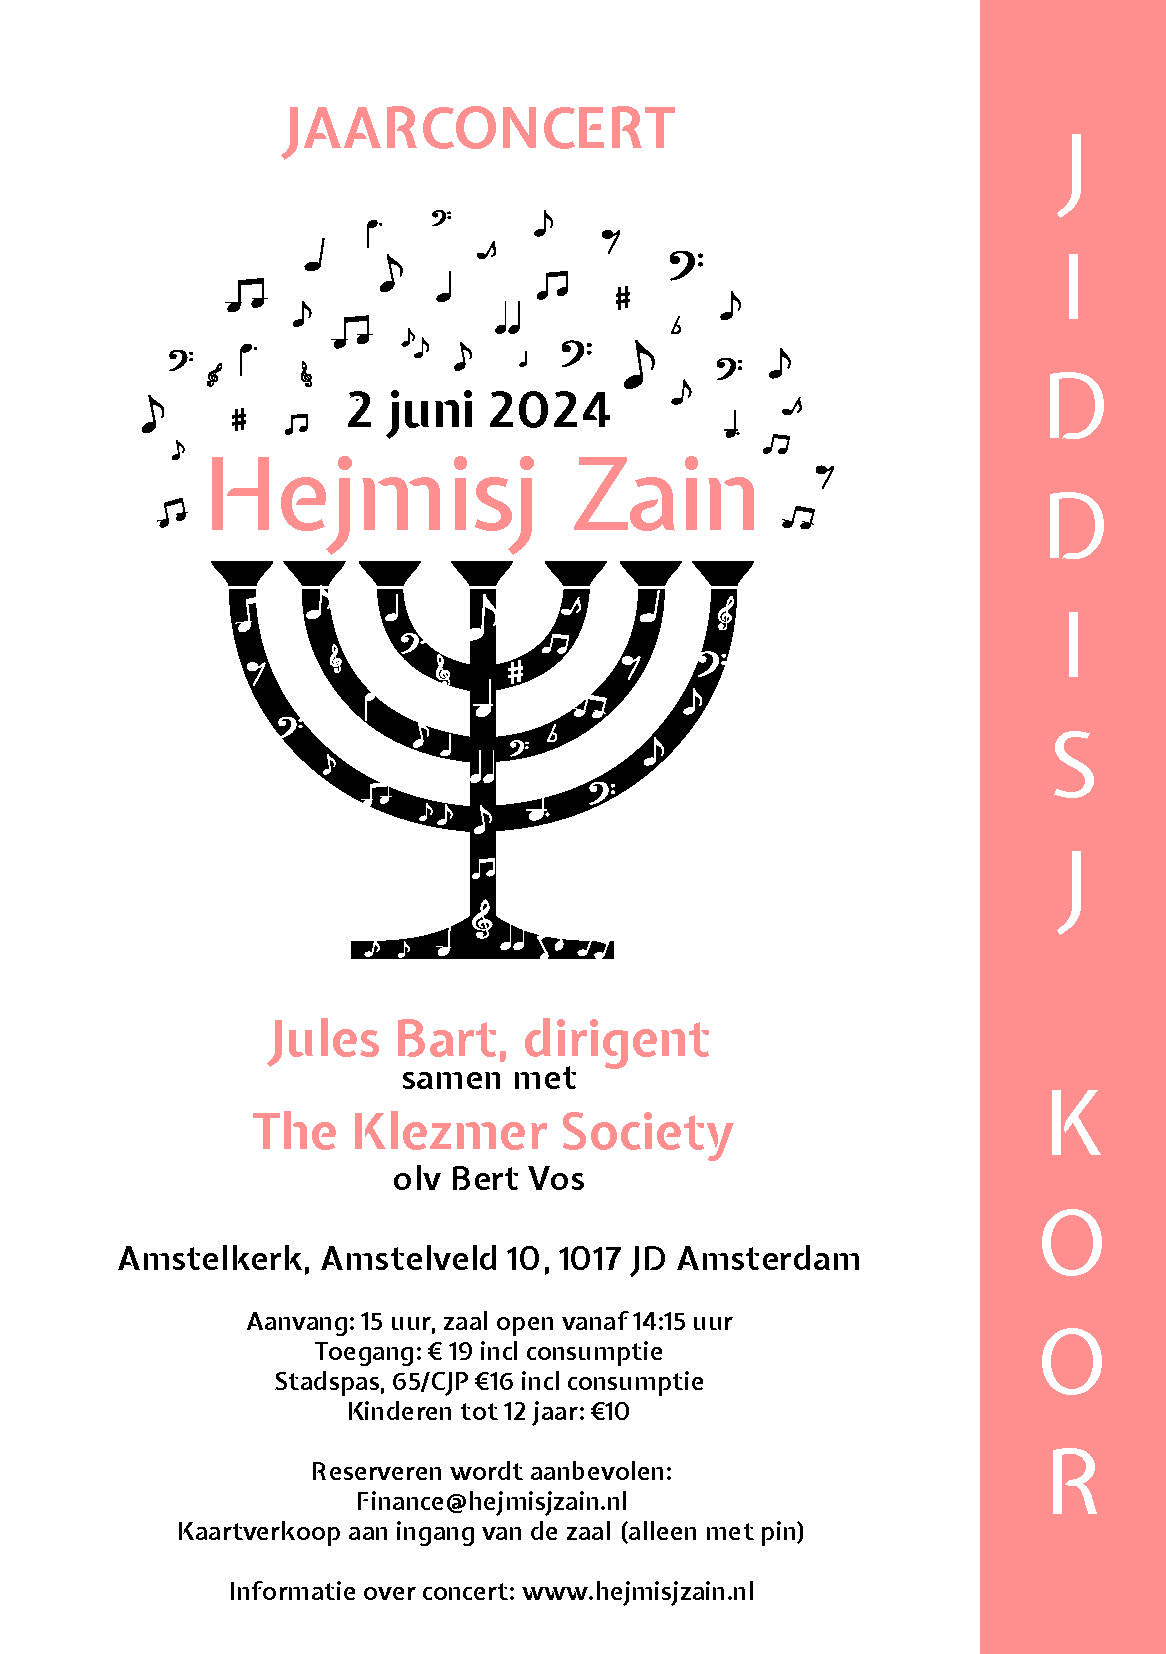 Concert van Jiddisj Koor Hejmisj Zain (A'dam)